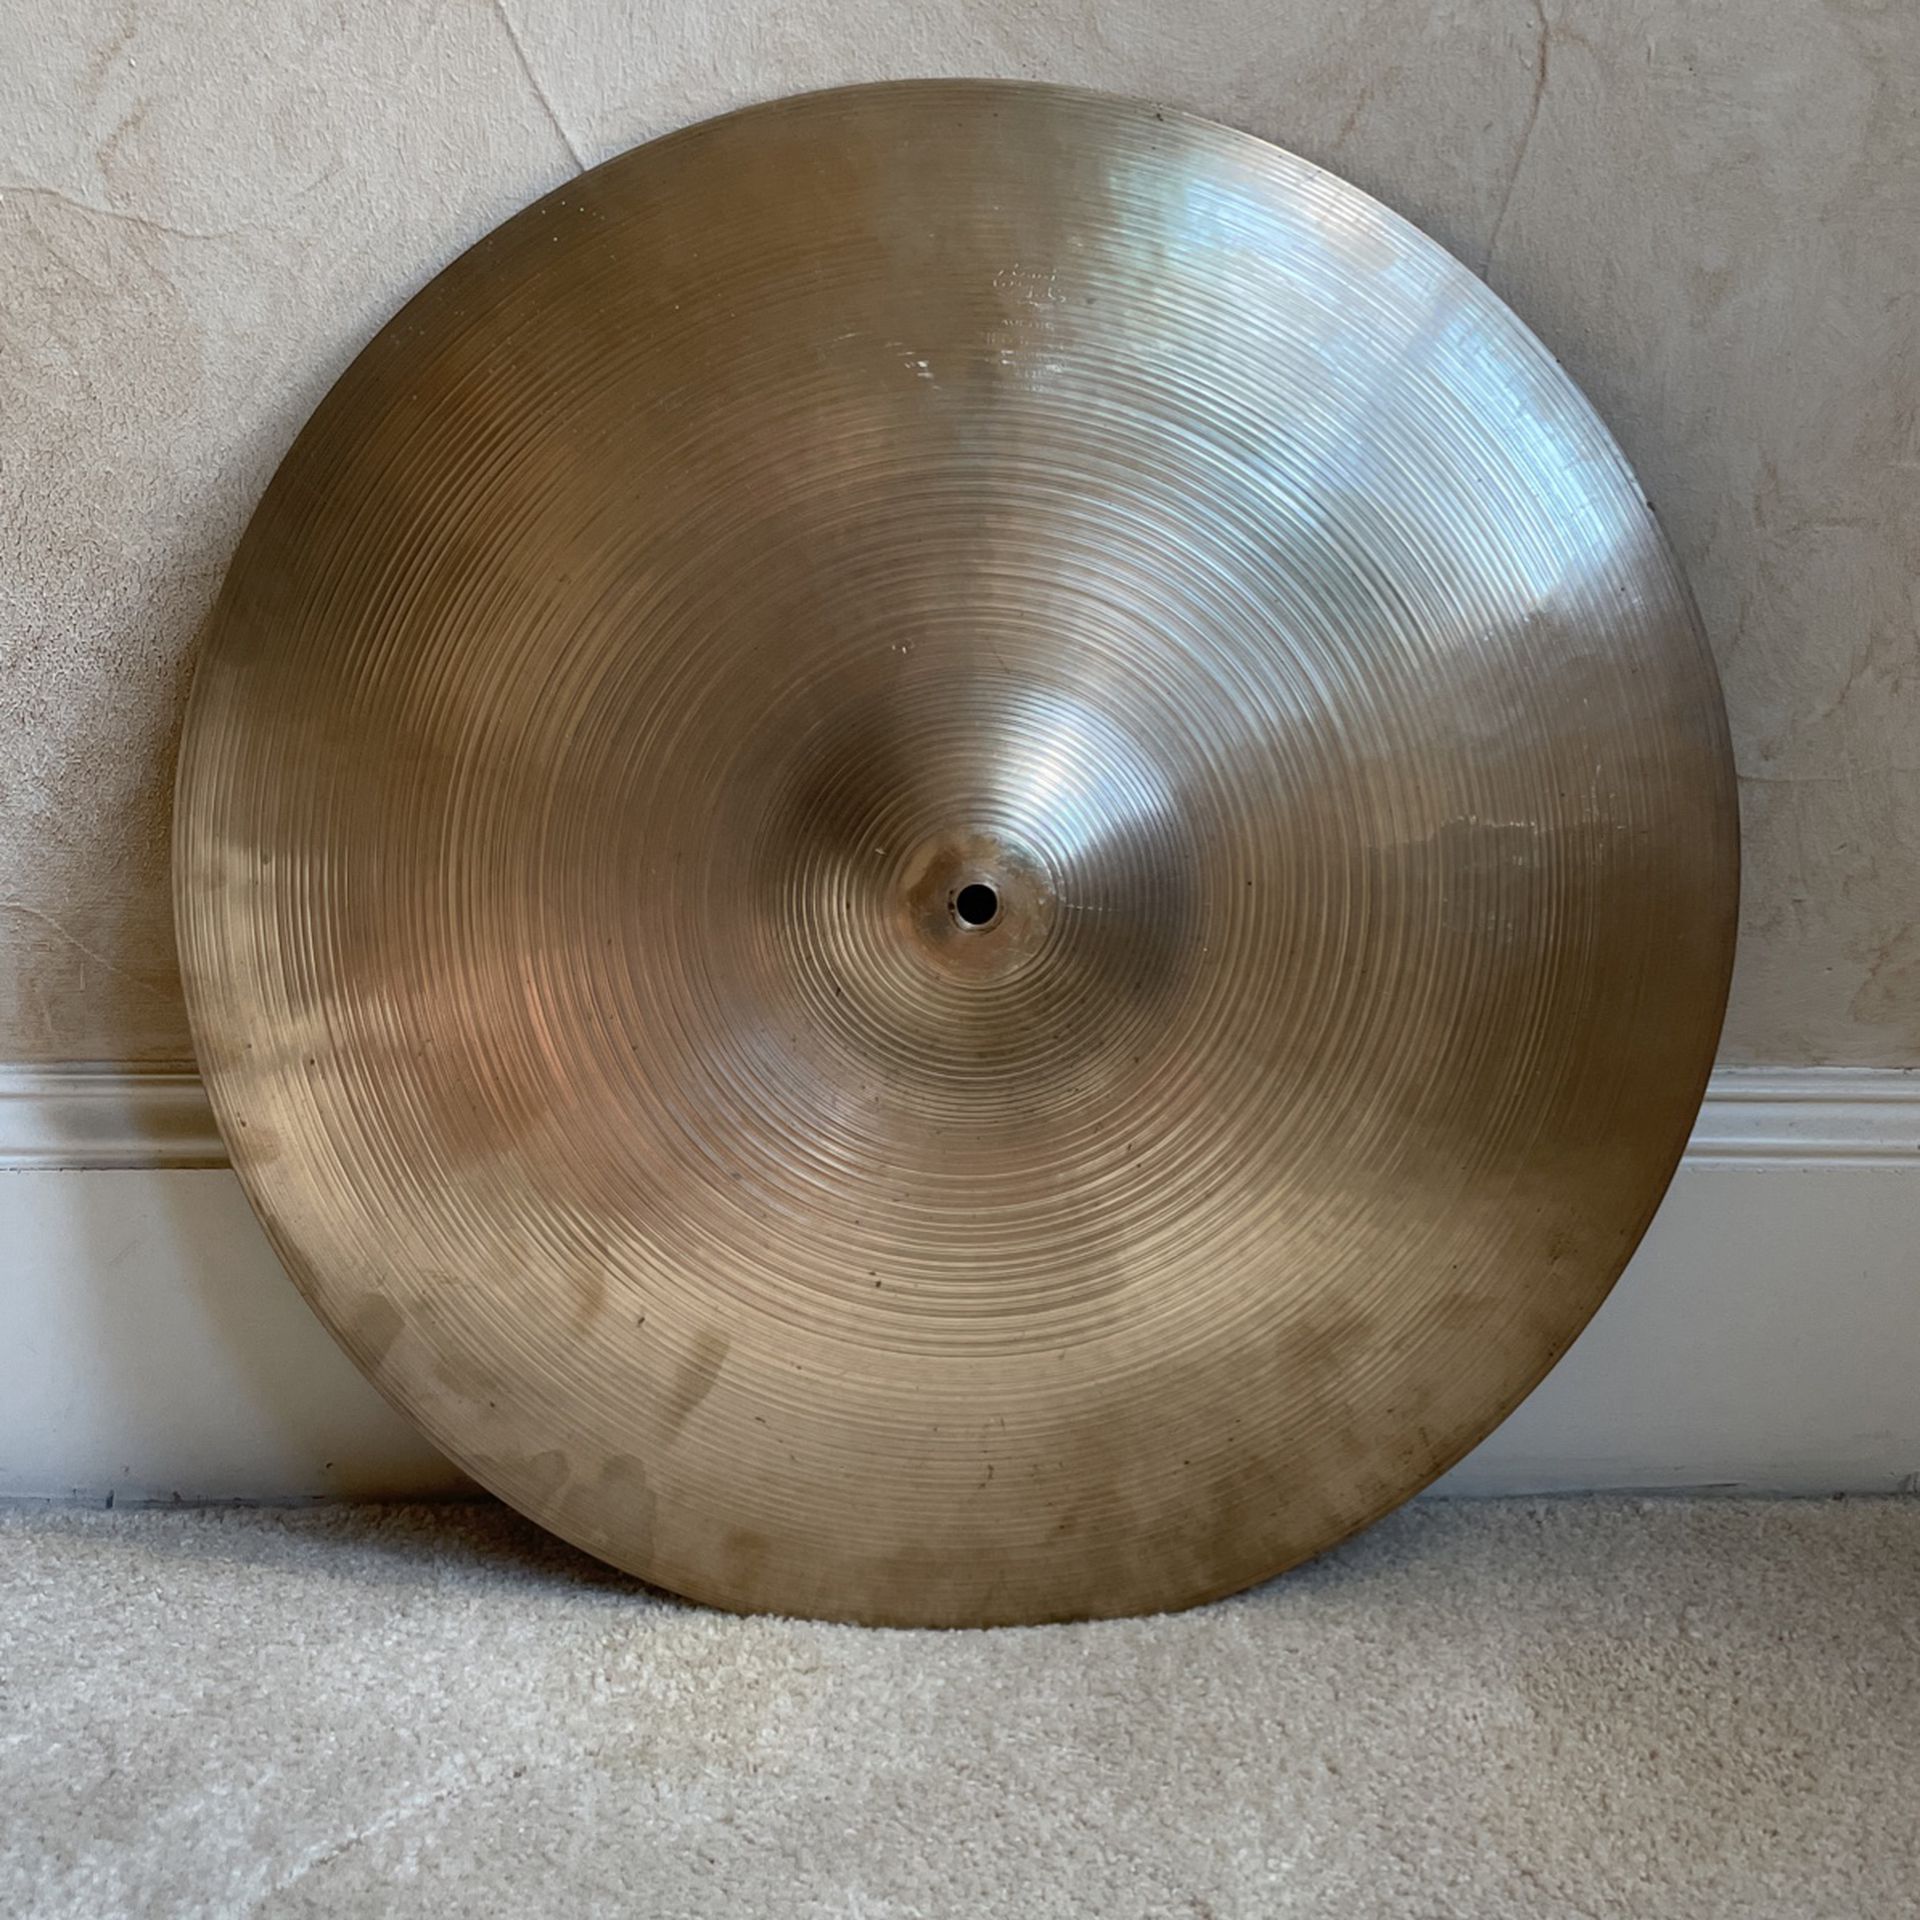 Zildjian 20” Ride or Crash Cymbal for Drum Set